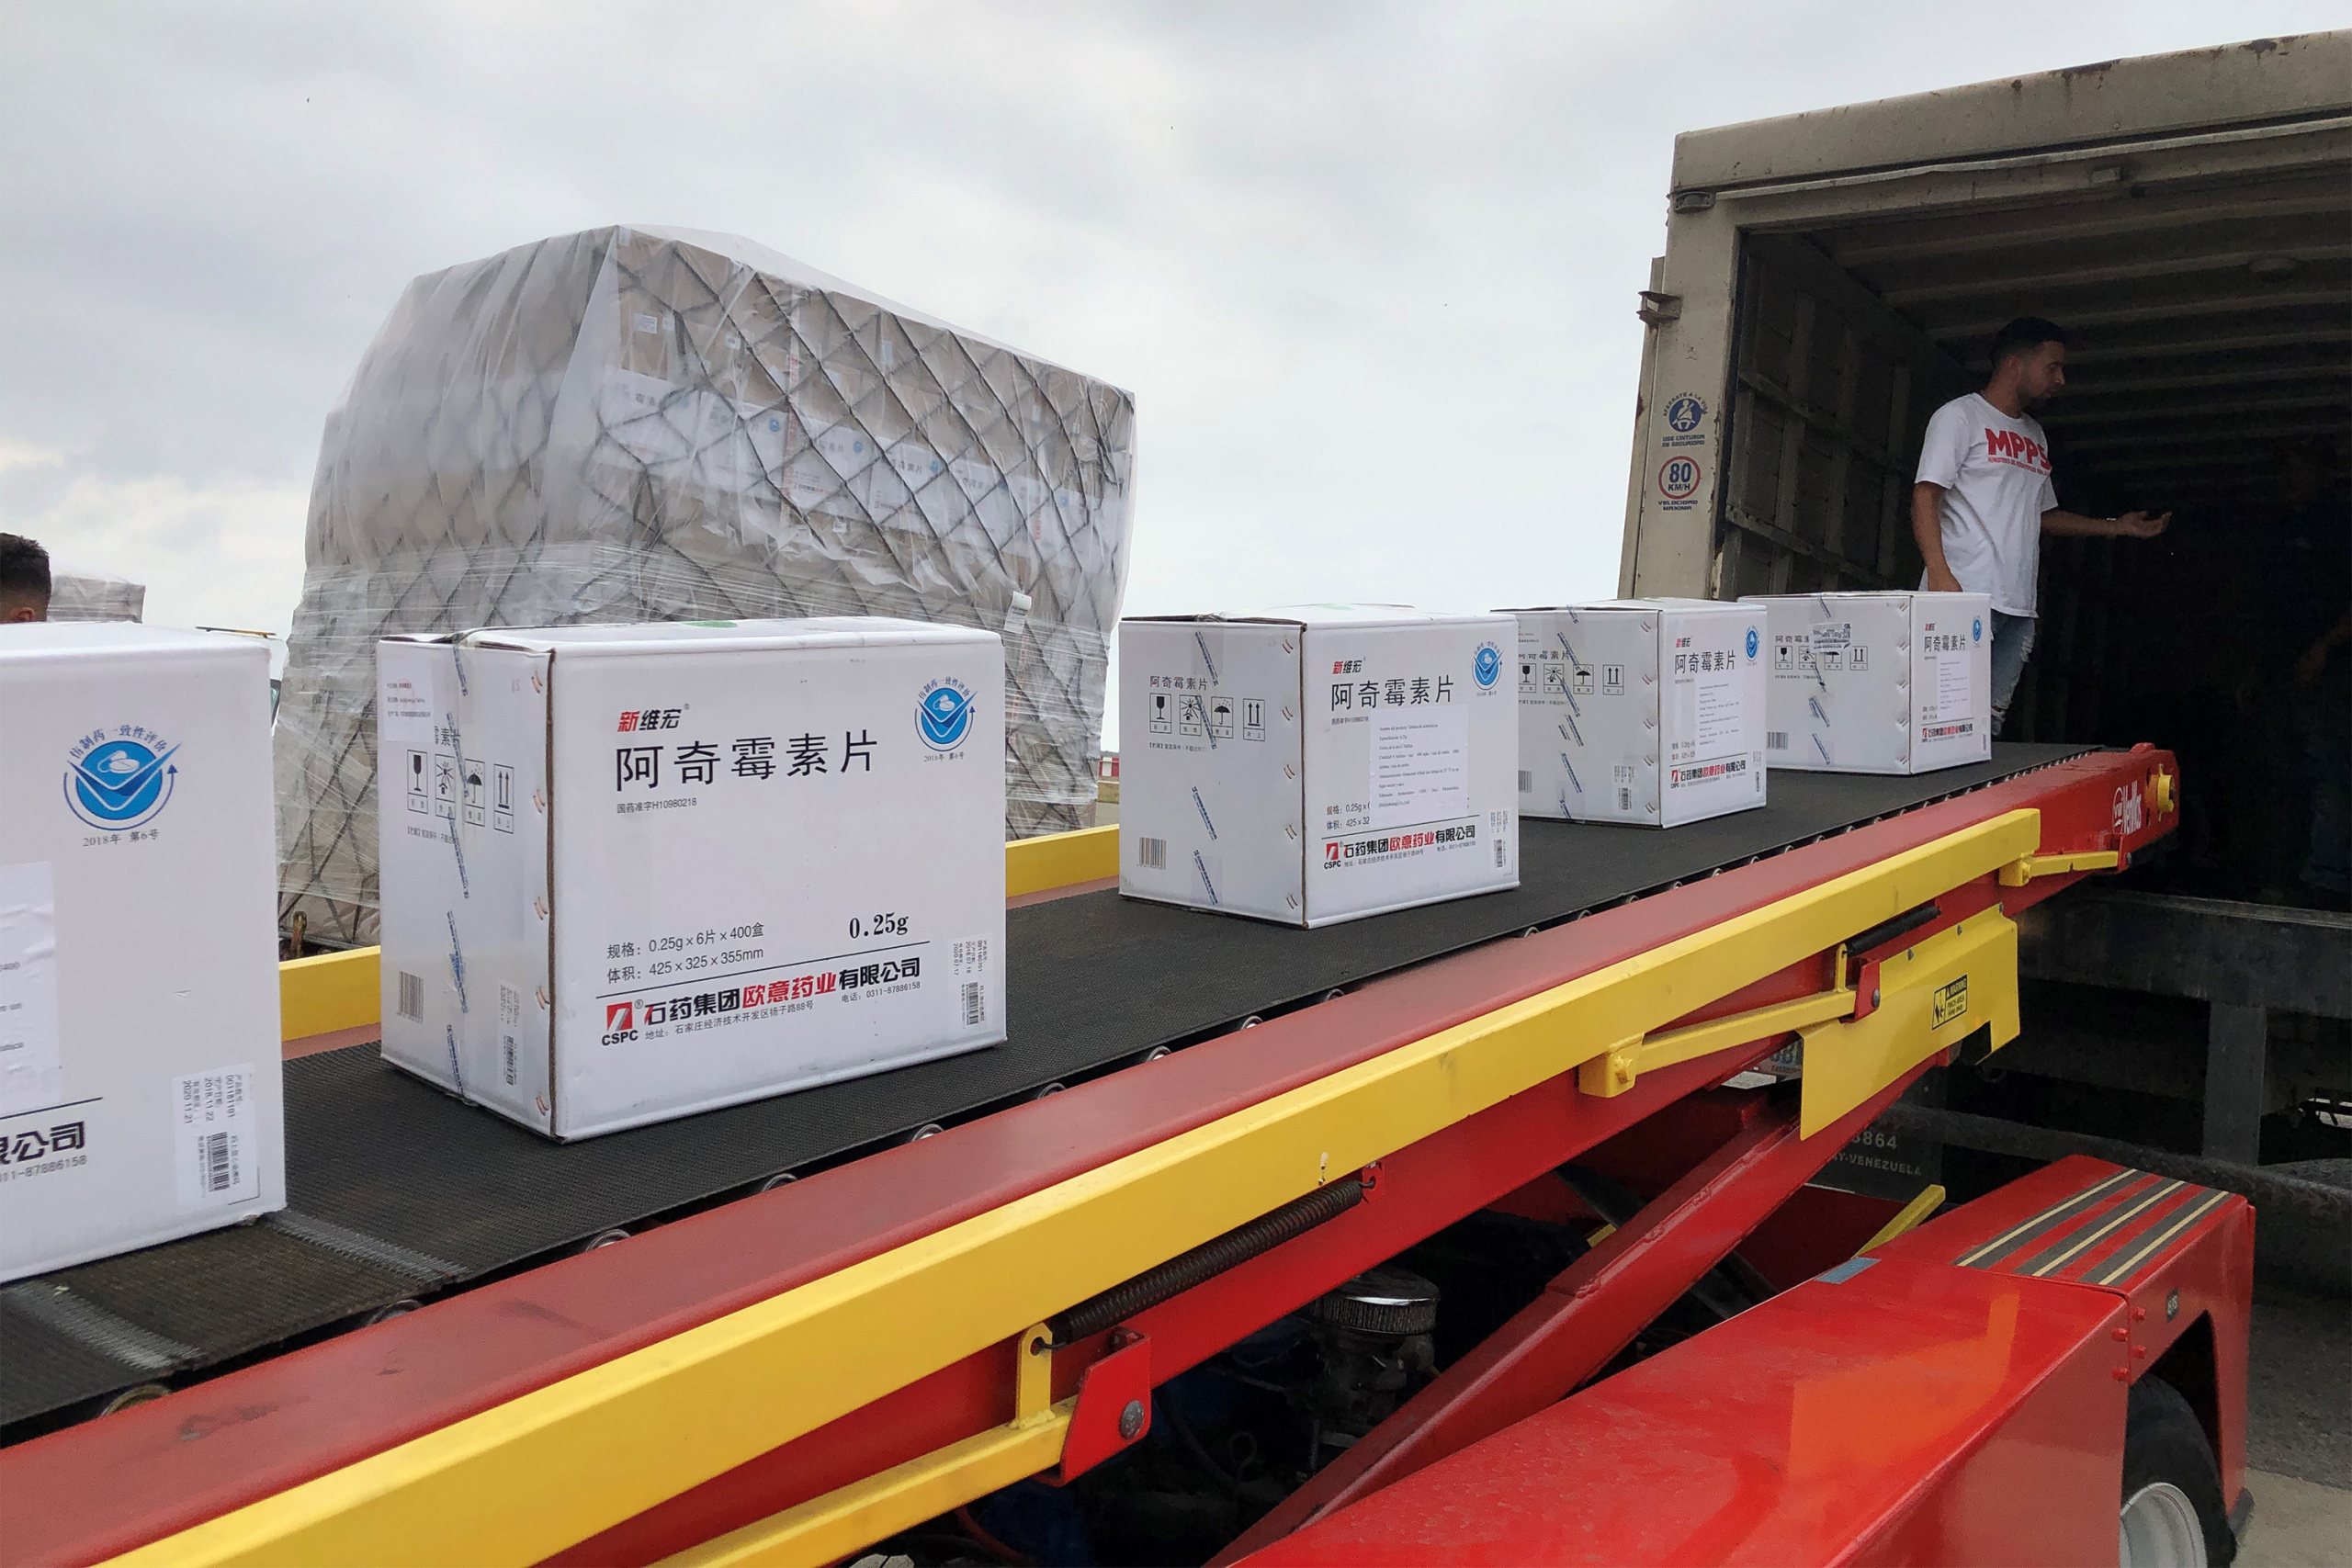 Venezuela Receives Aid From China